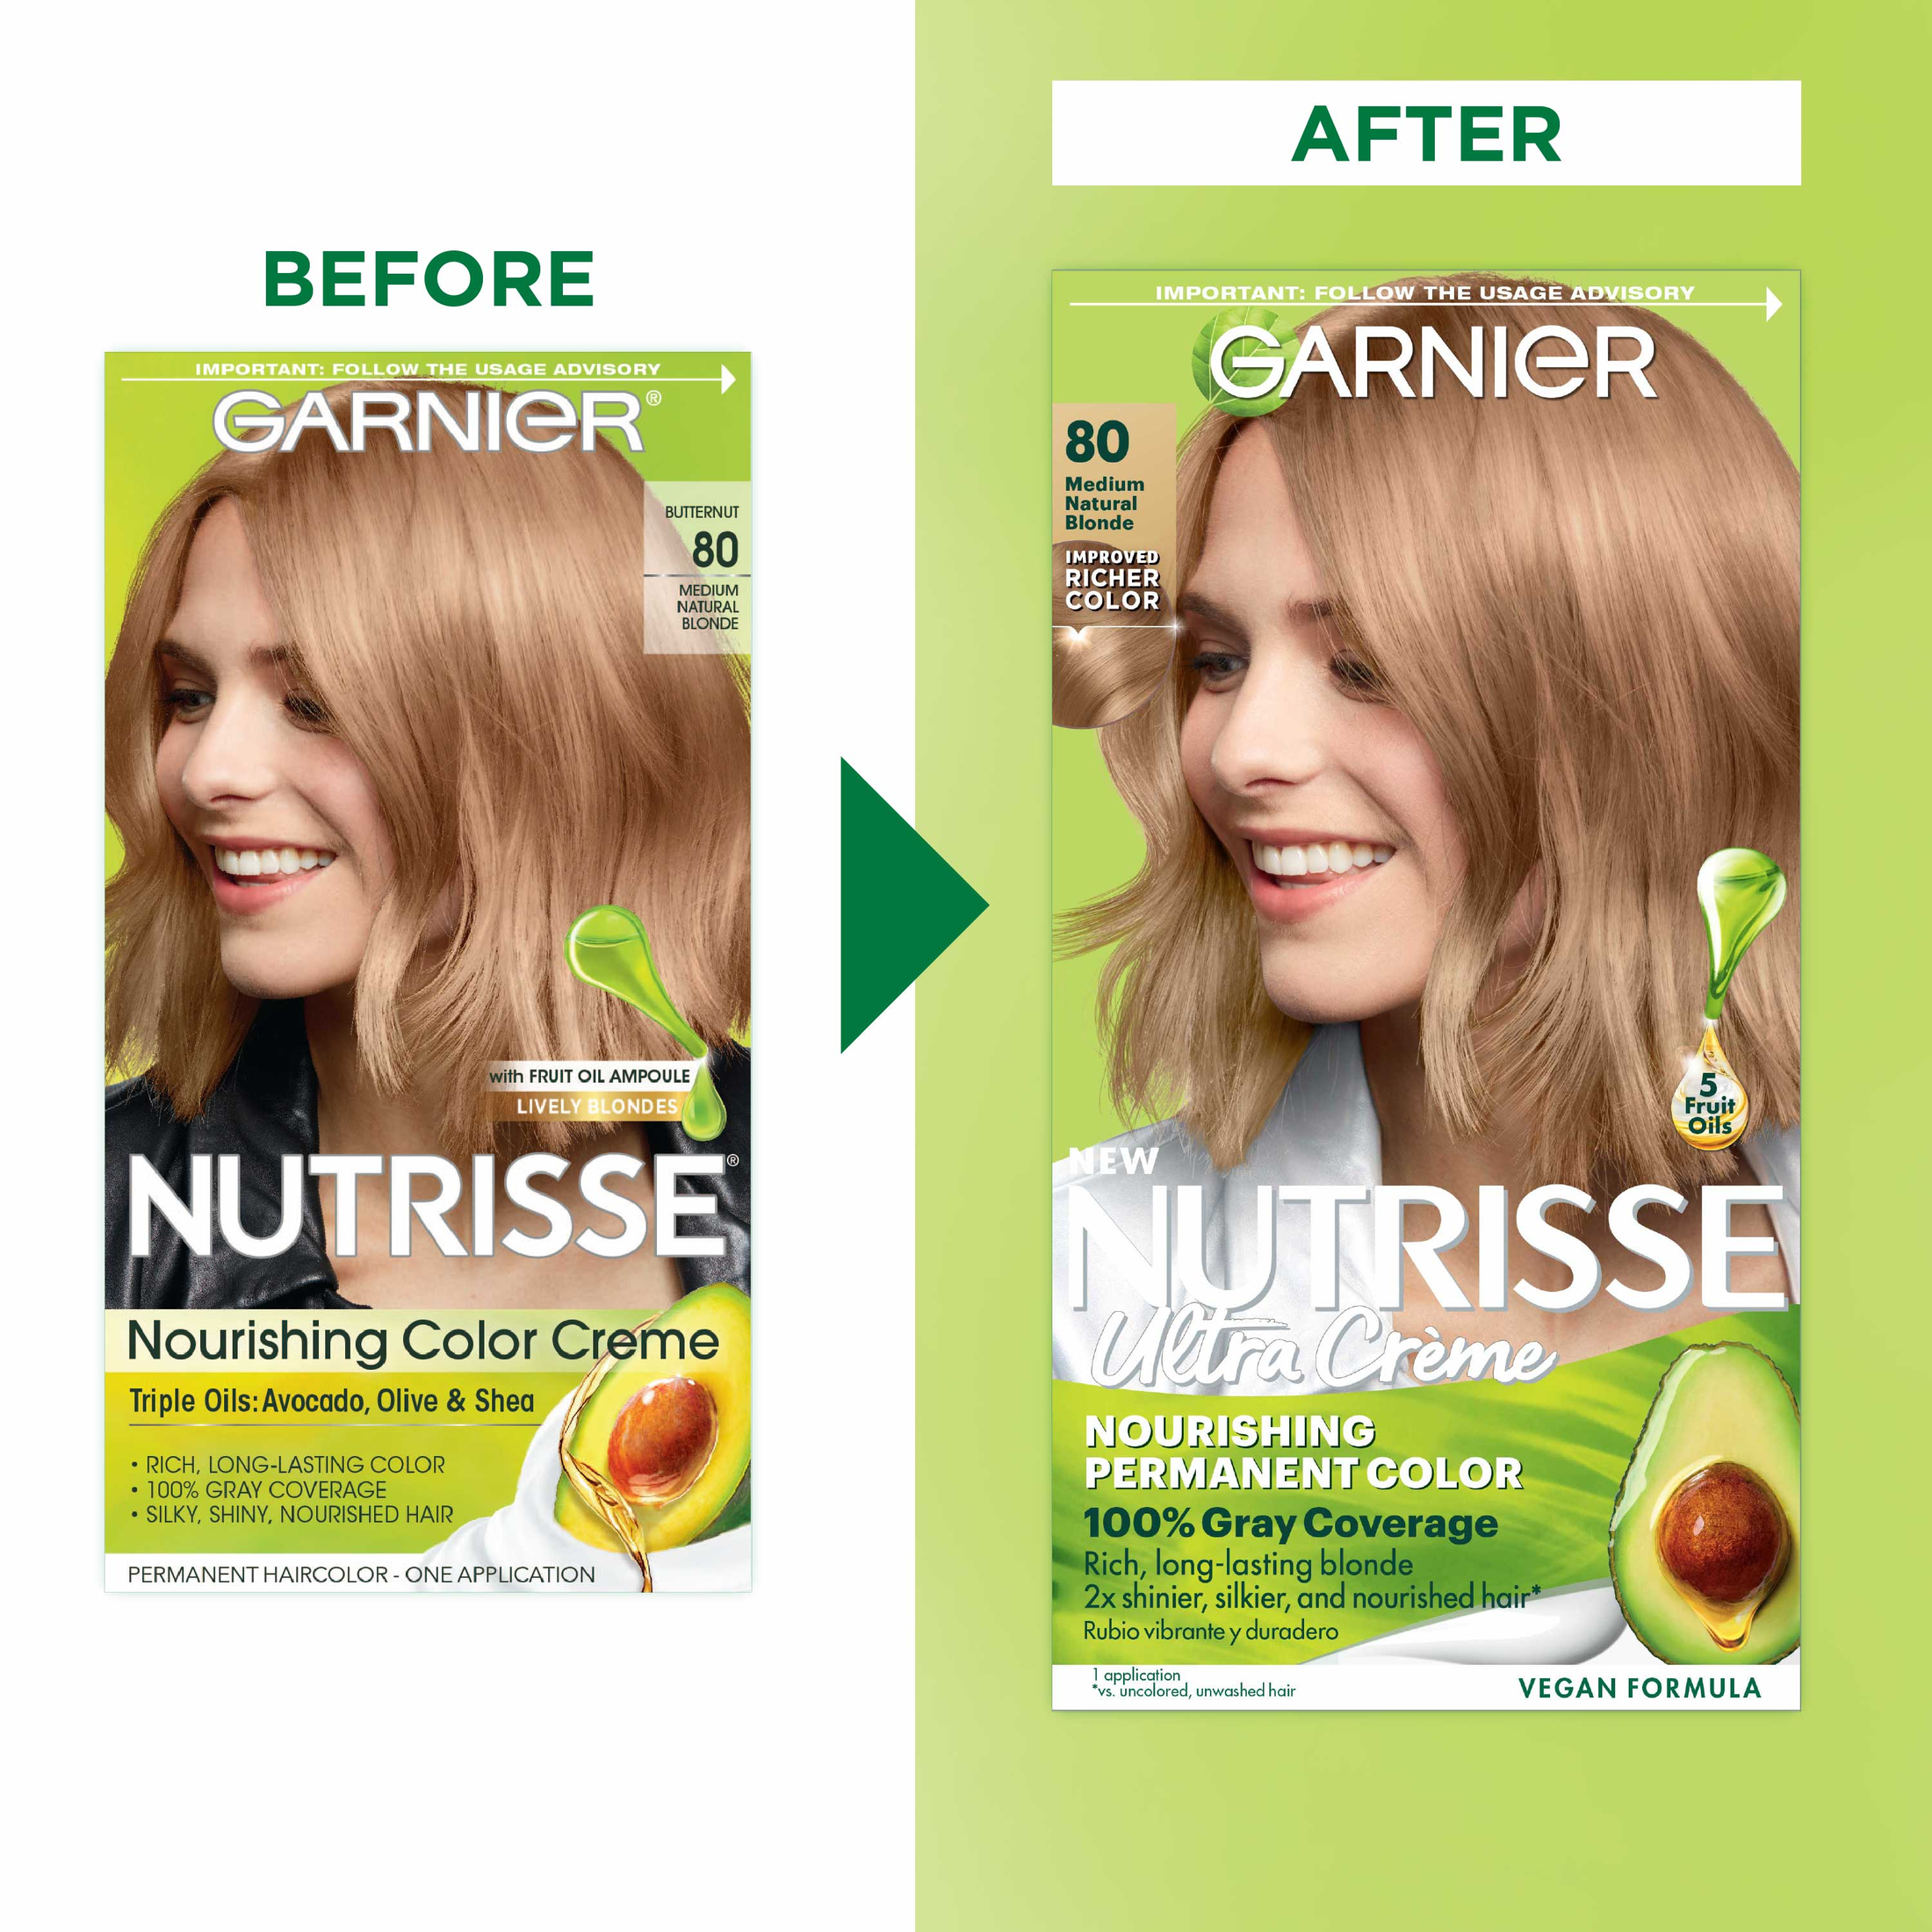 Garnier Nutrisse Nourishing Hair Color Creme, 080 Medium Natural Blonde Butternut - image 3 of 11